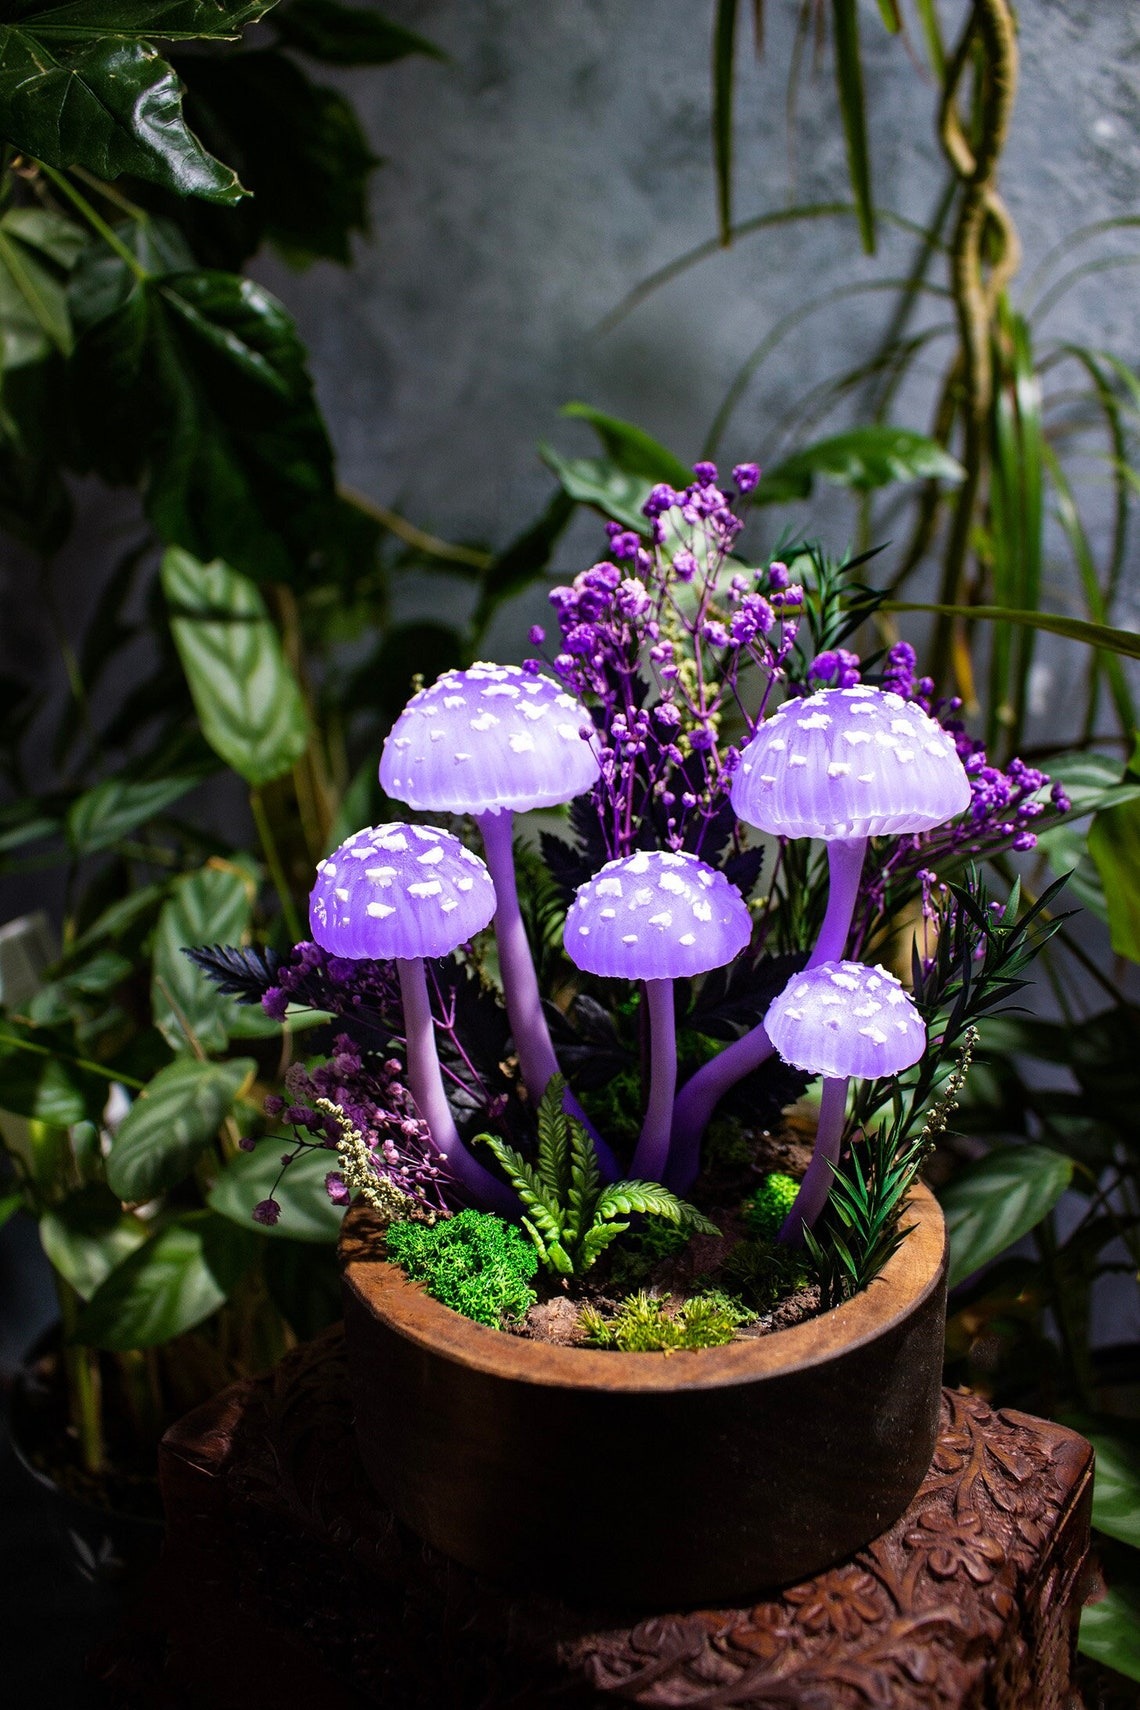 Wonderful Mushroom Lamps With Vivid Colors By Katya Sneg (8)